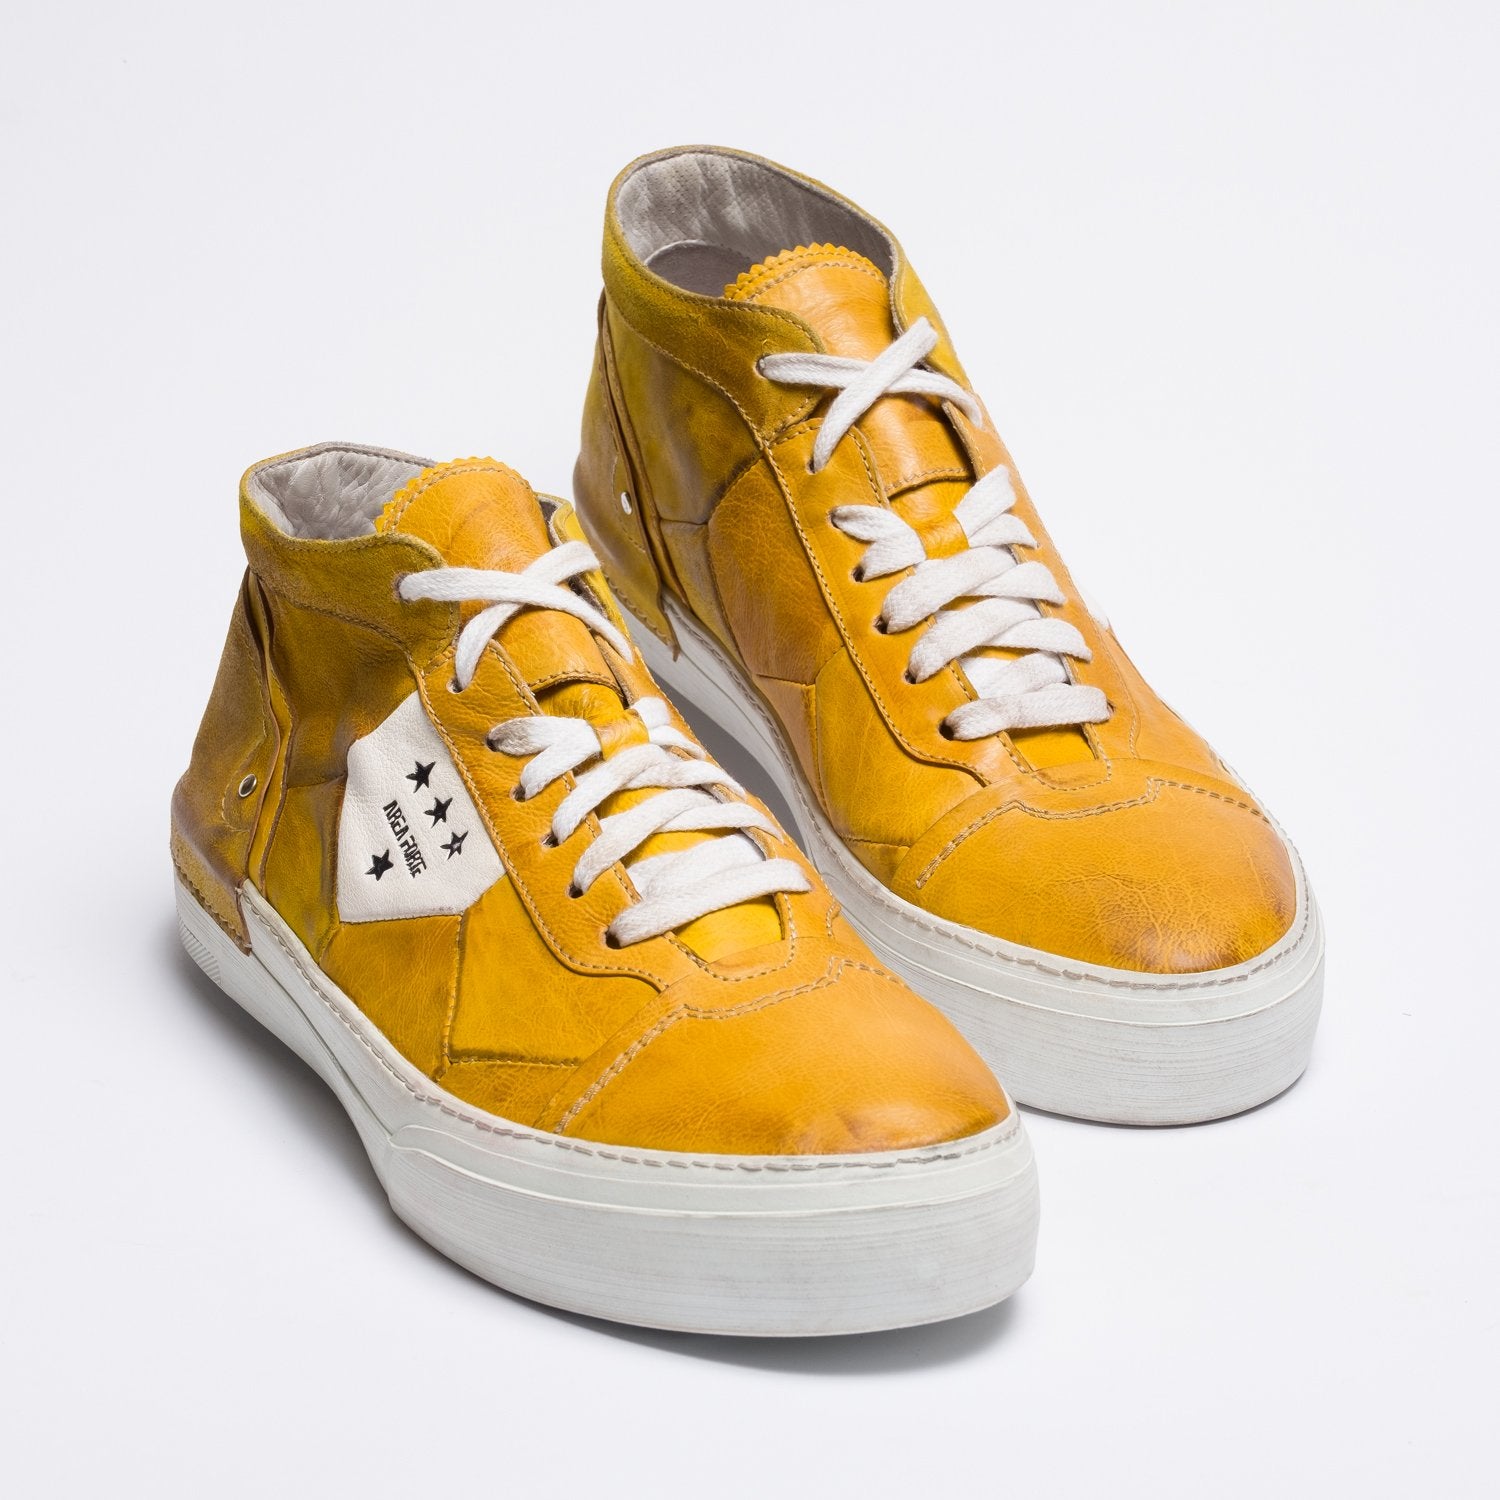 Mundialito mid yellow sneakers